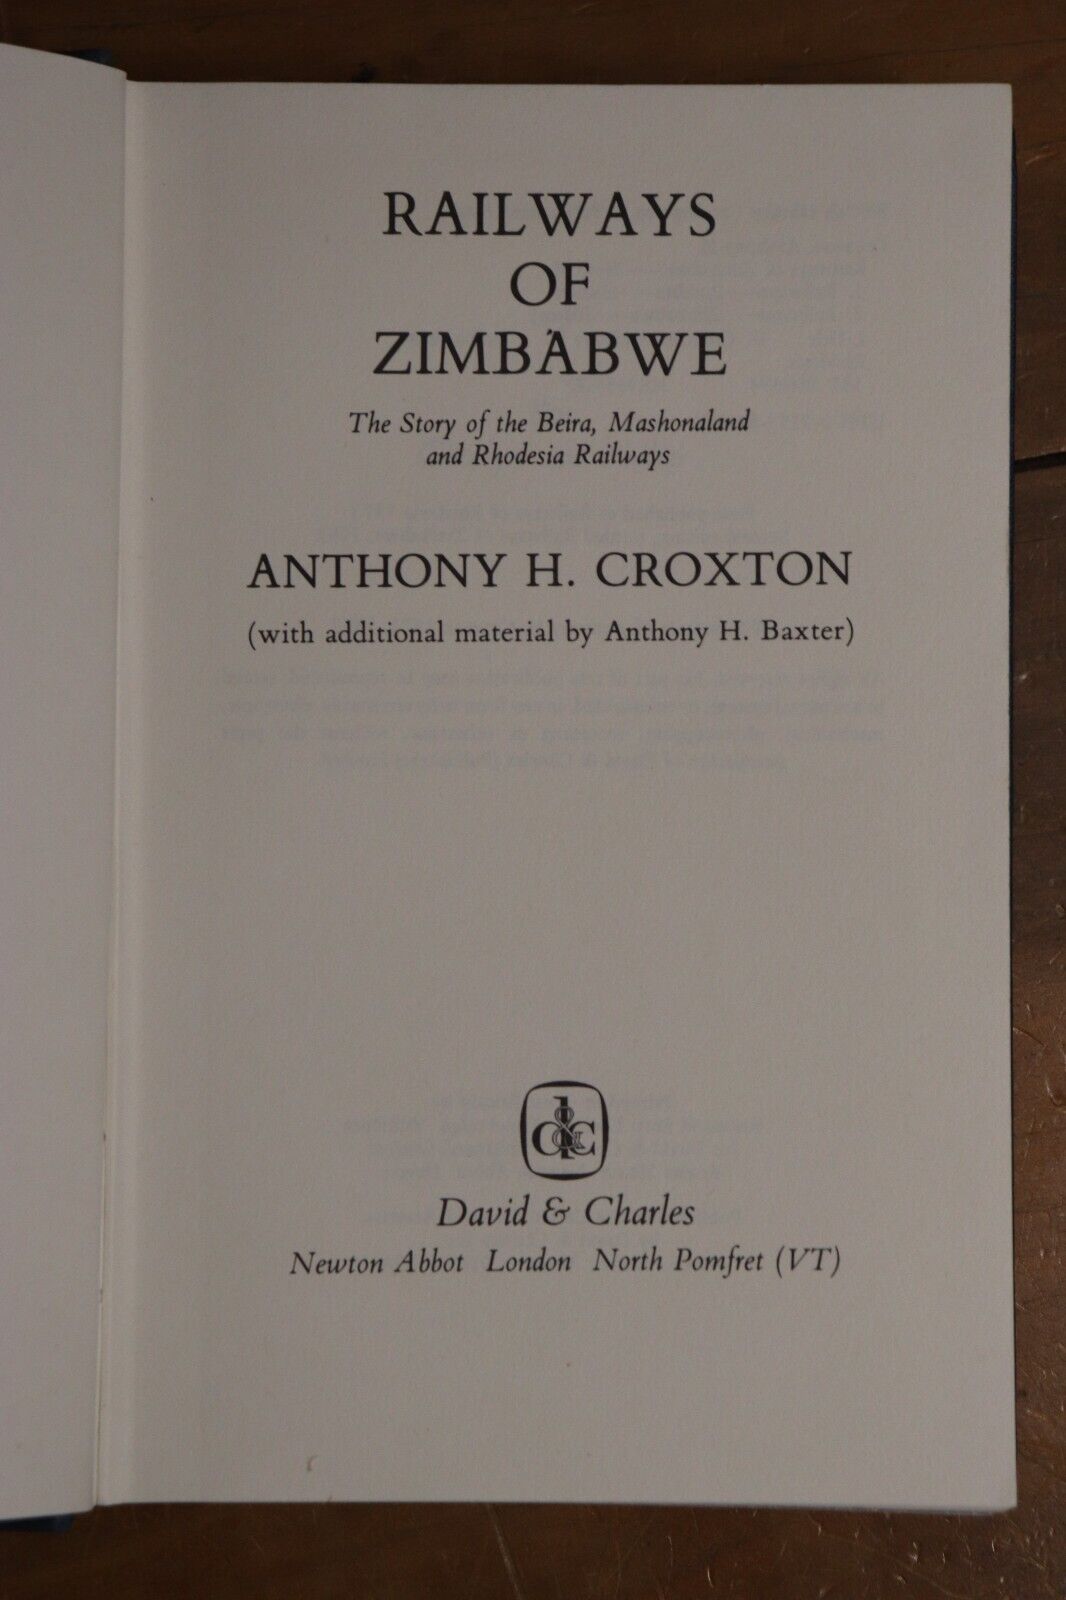 Railways of Zimbabwe by AH Croxton - 1982 - African Railway History Book